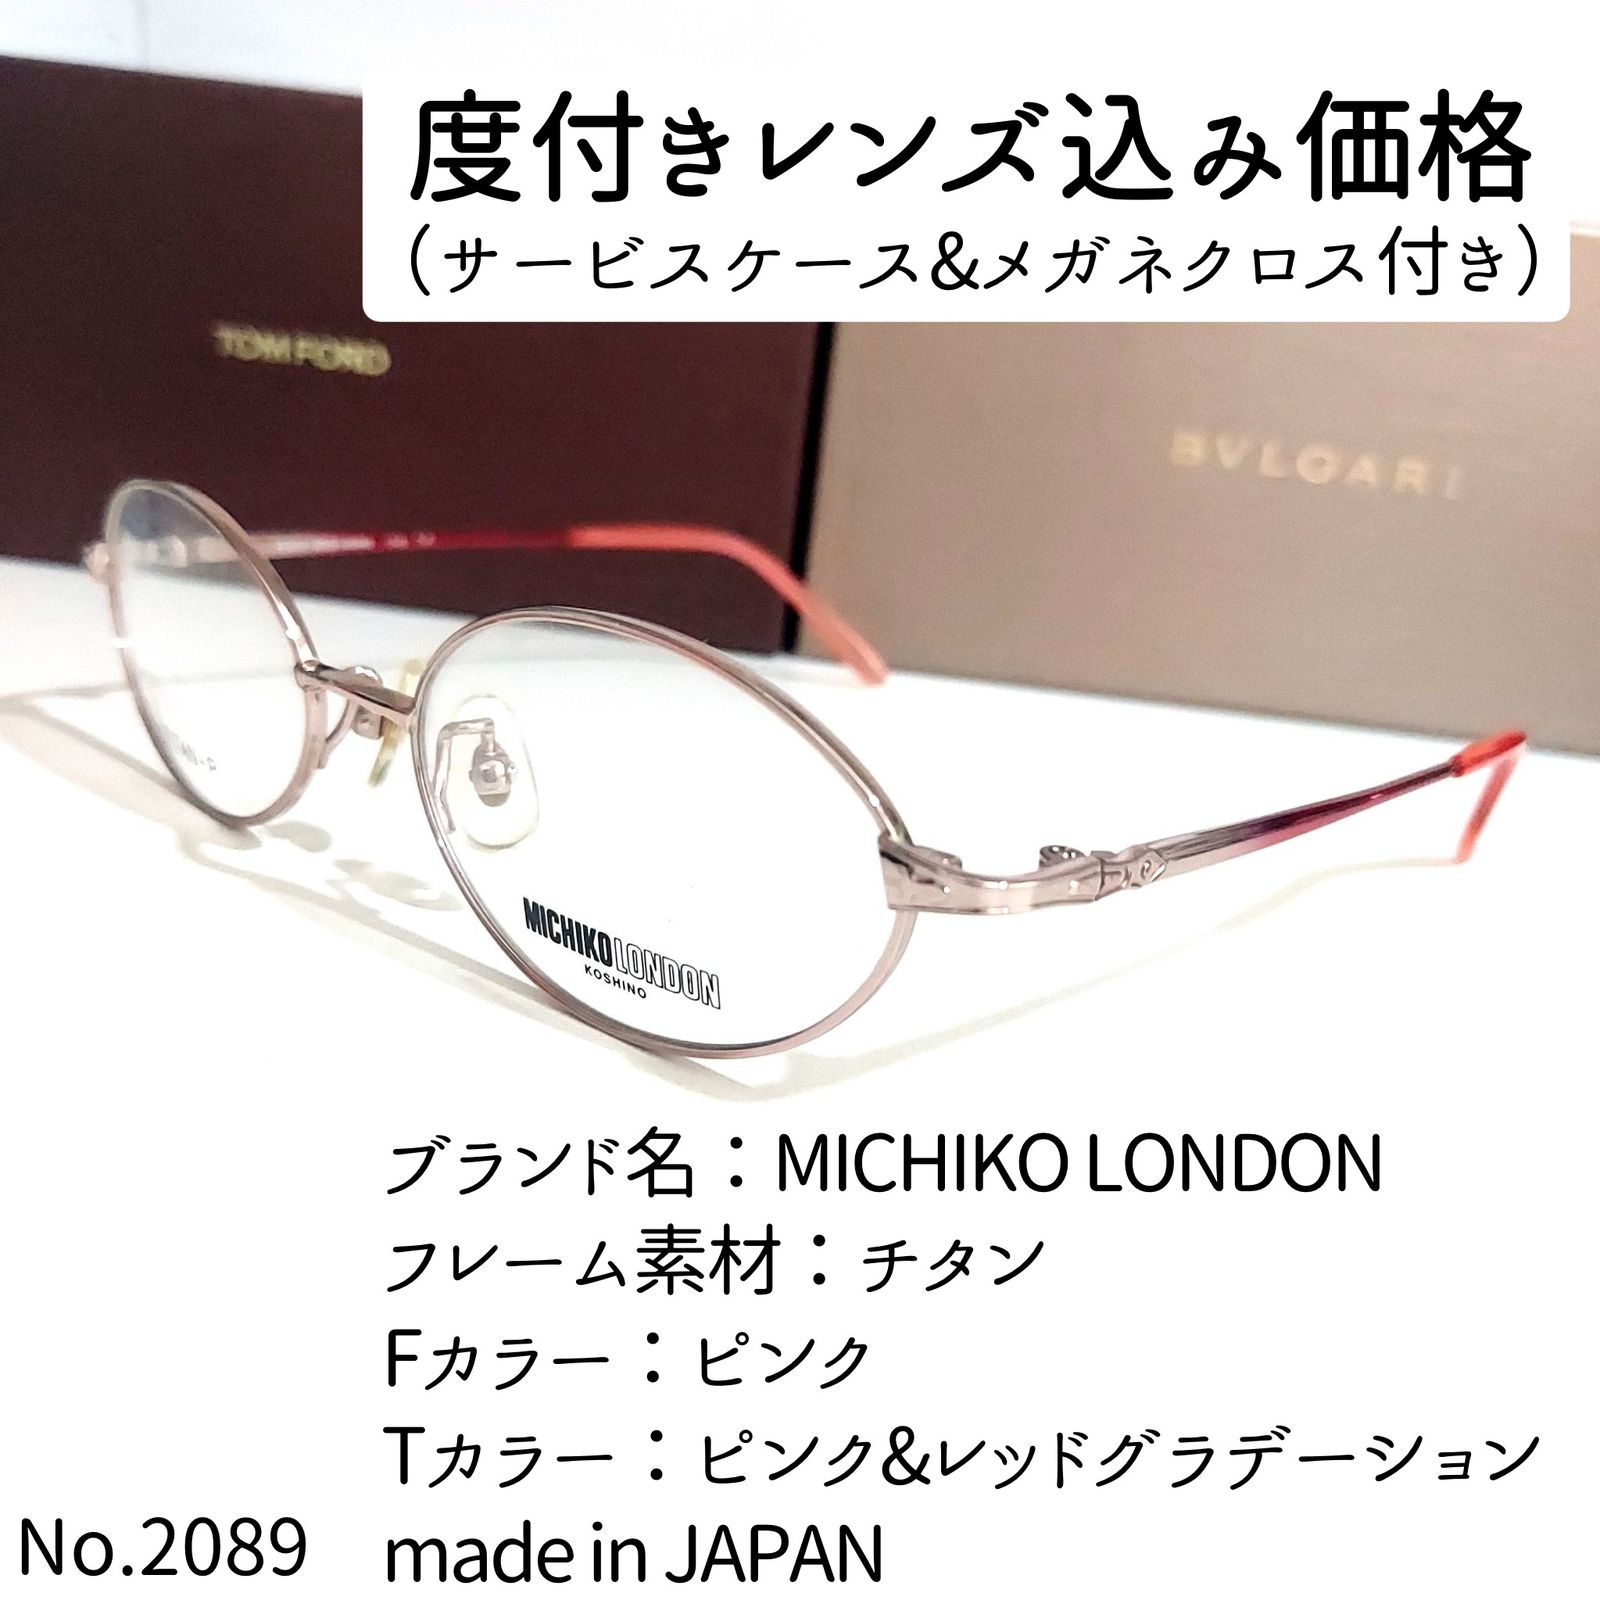 No.2089+メガネ MICHIKO LONDON【度数入り込み価格】-